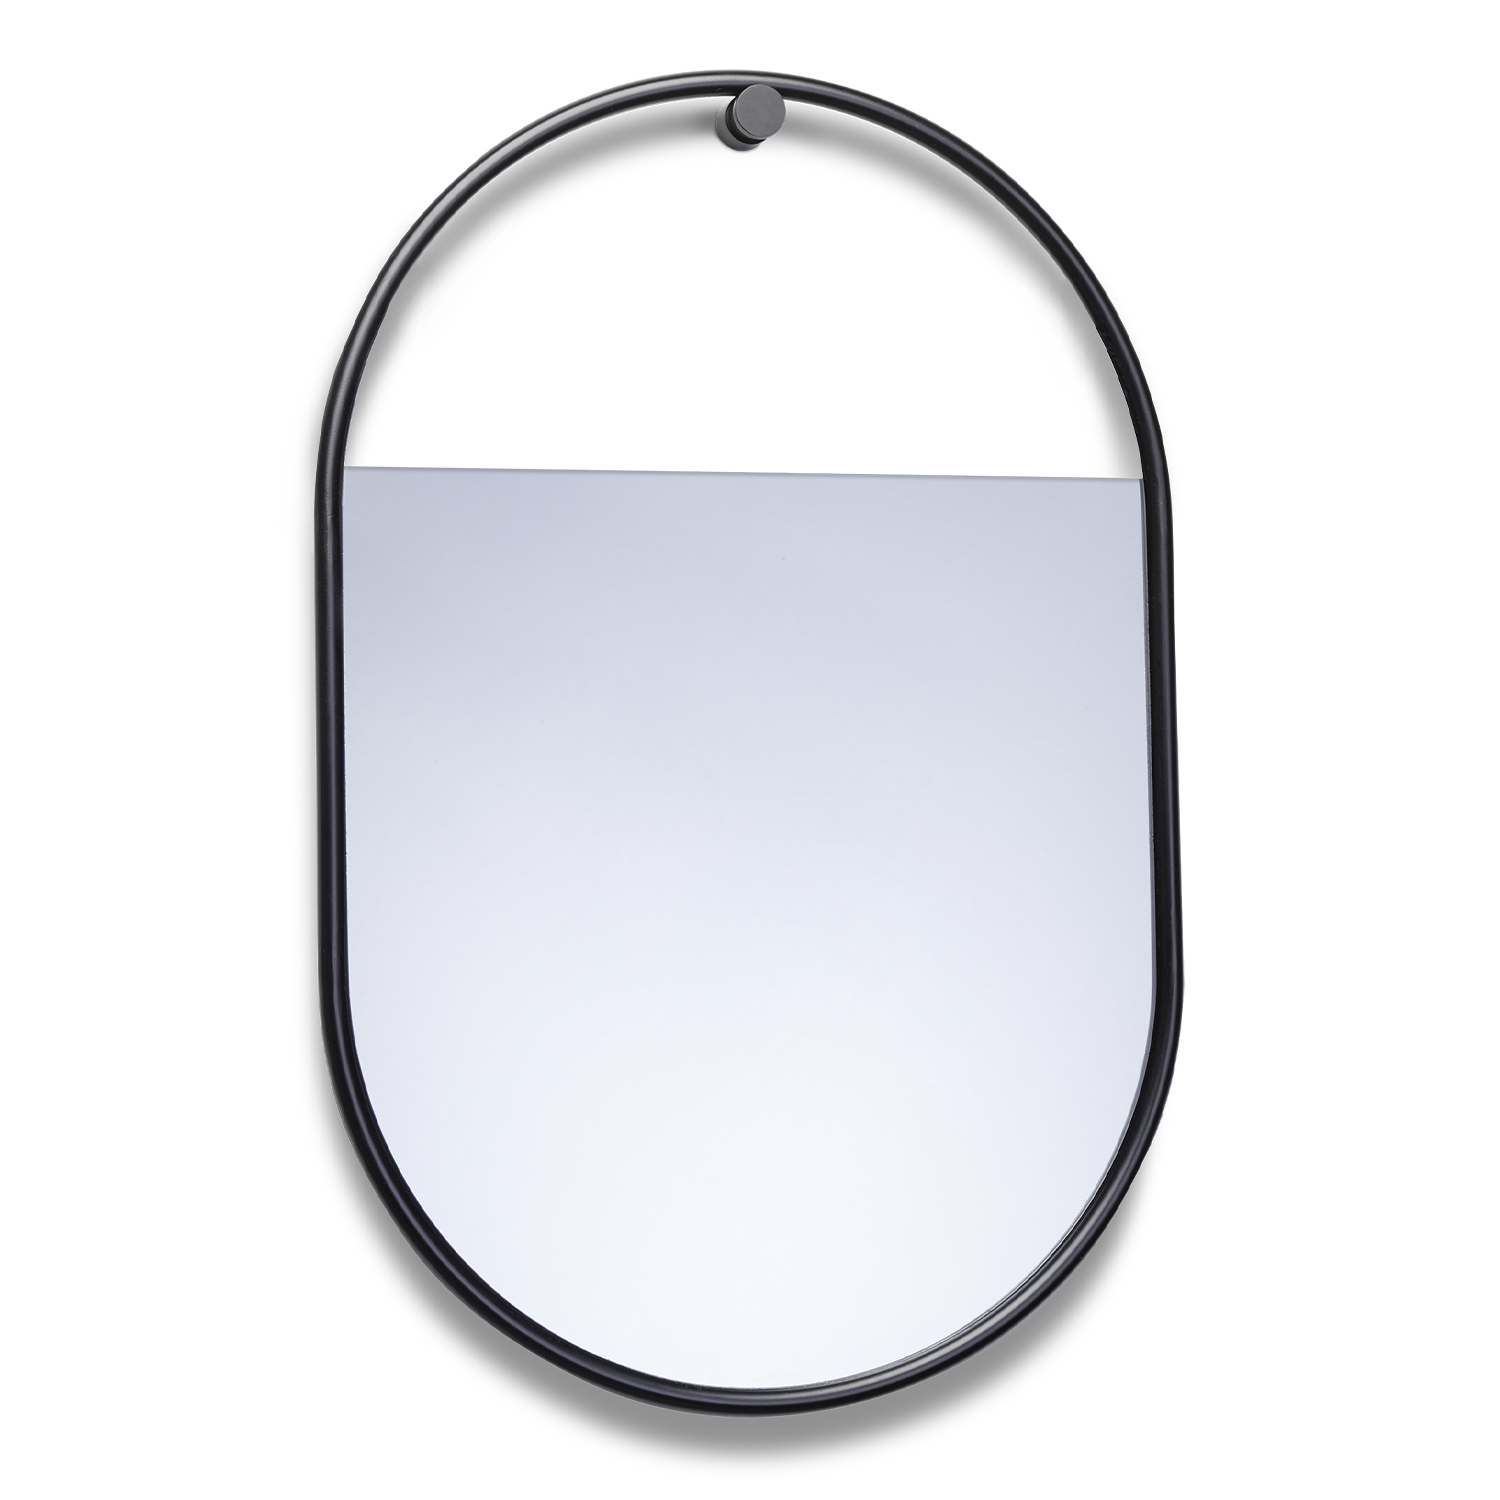 Northern designová zrcadla Peek Oval Small